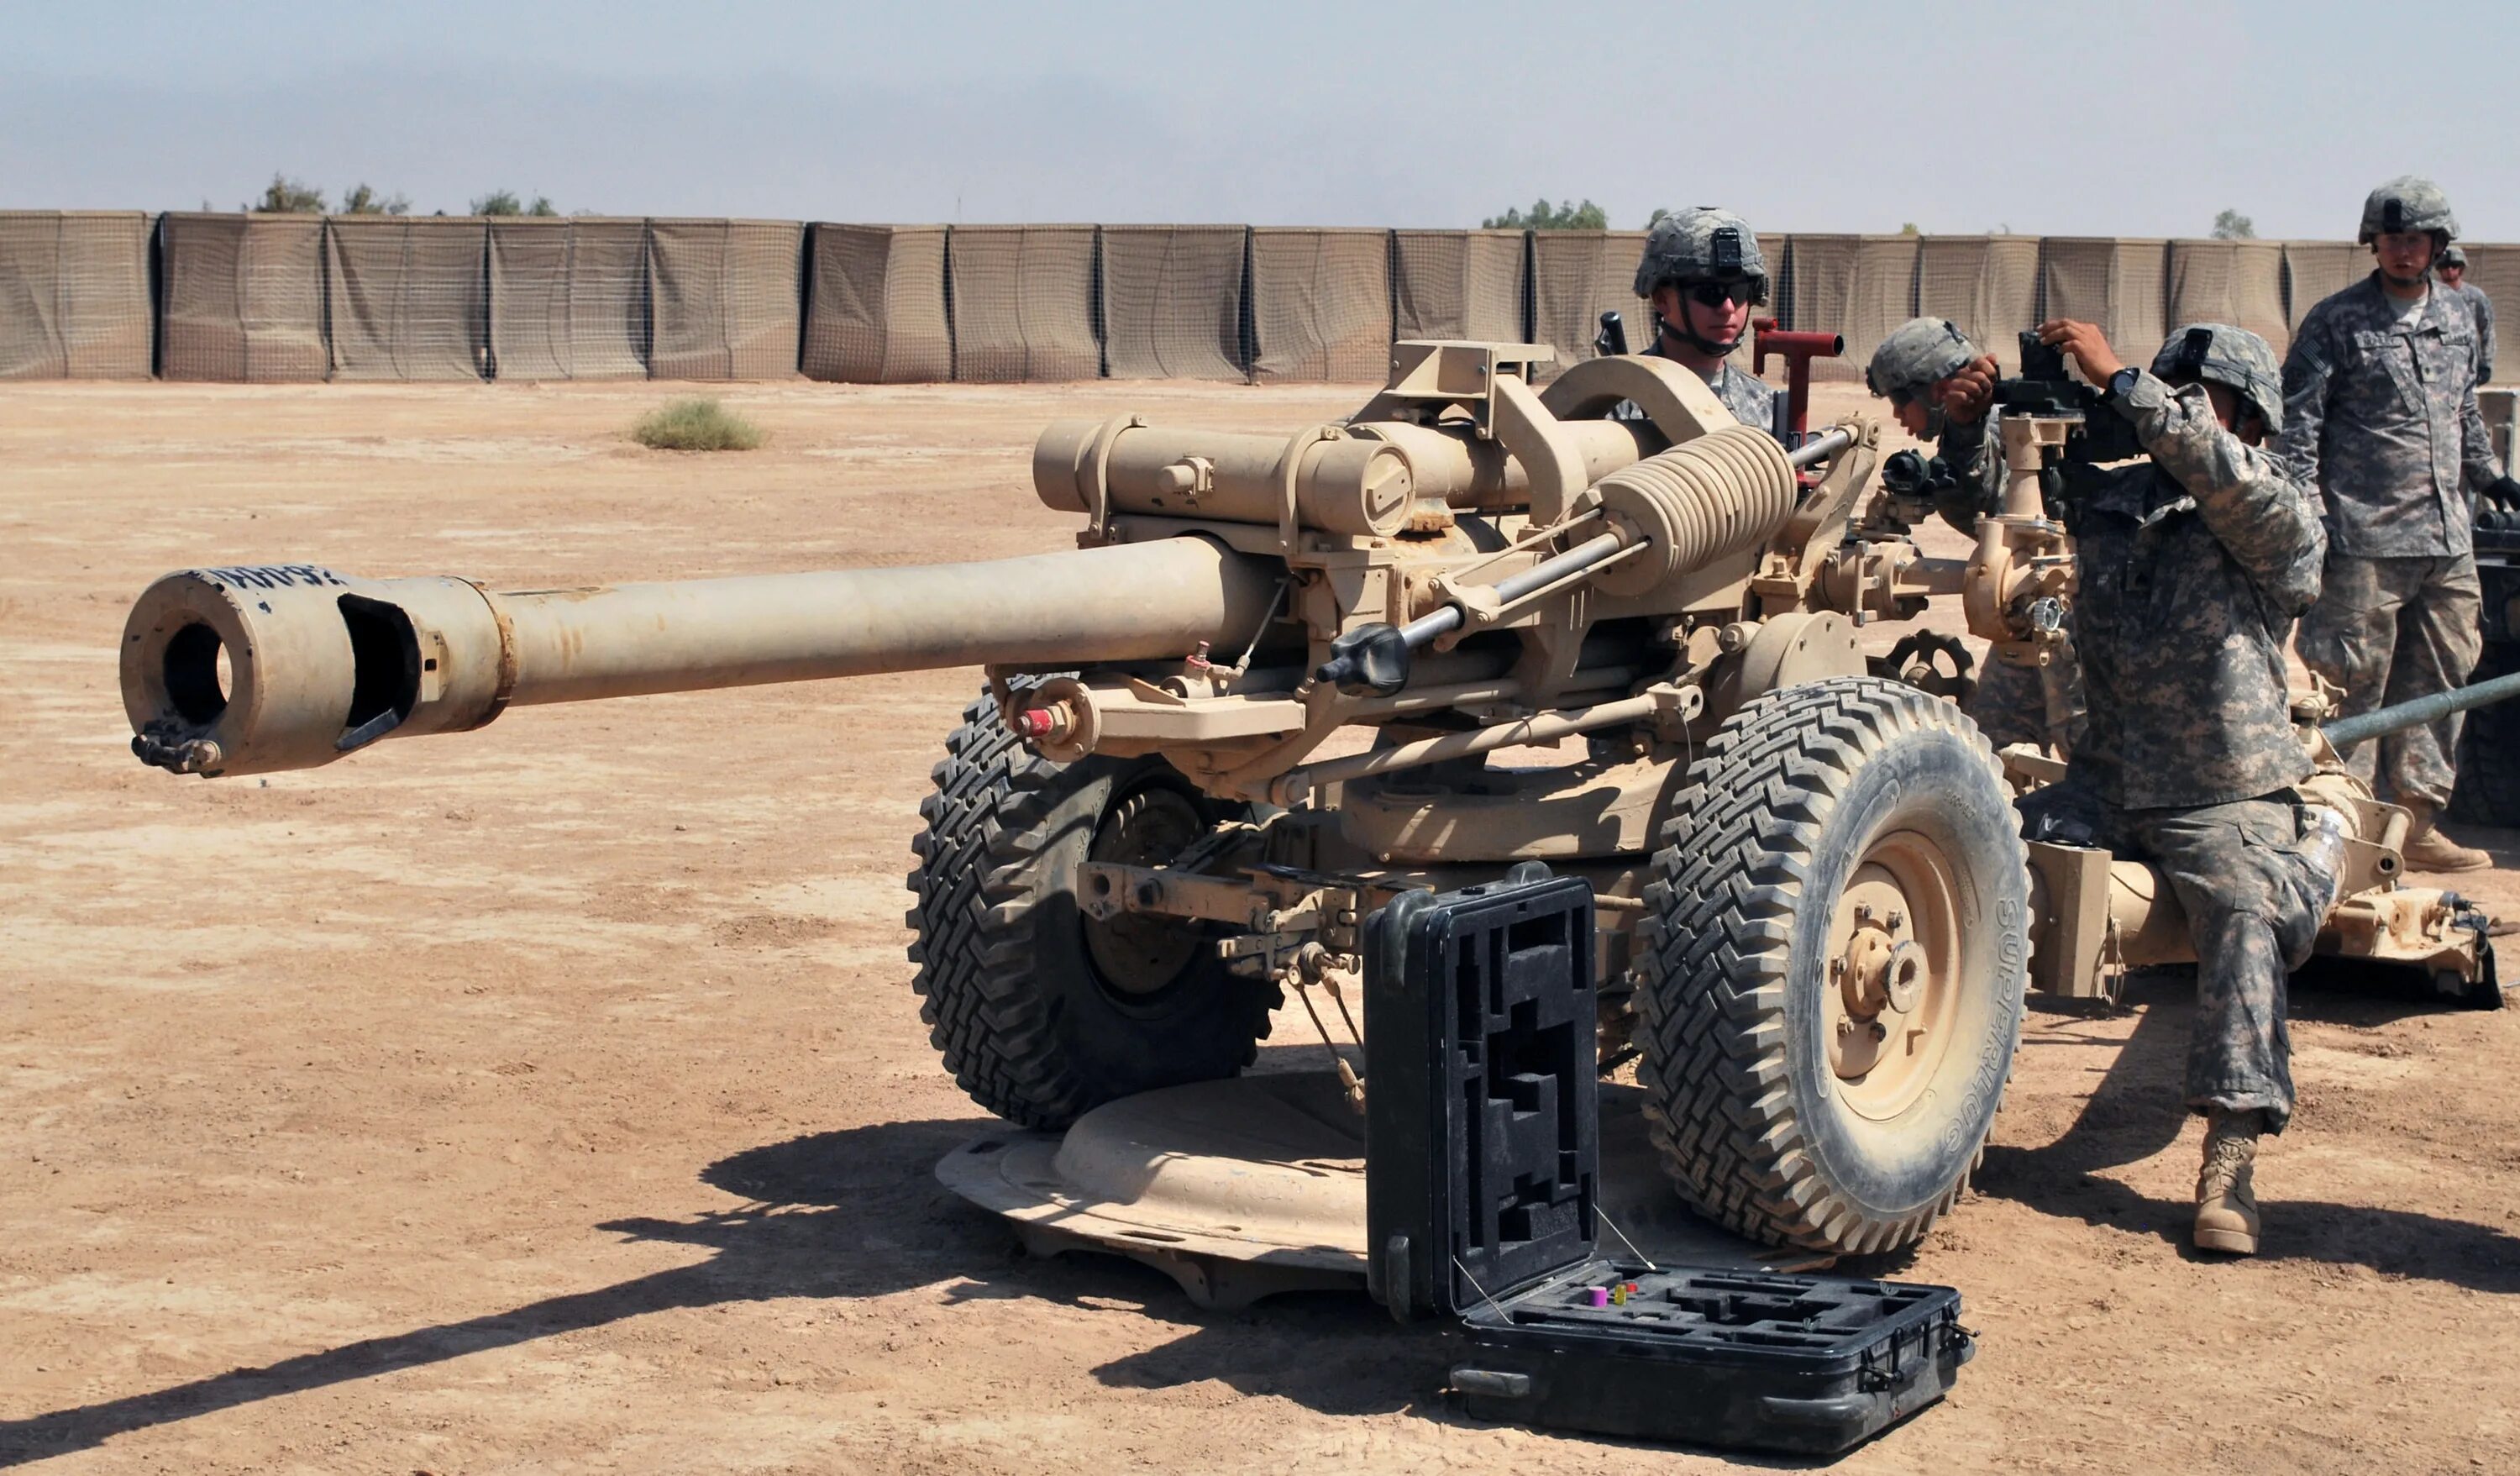 M198 Howitzer. M198 155mm Howitzer. M198 гаубица. M119 — 105-мм.